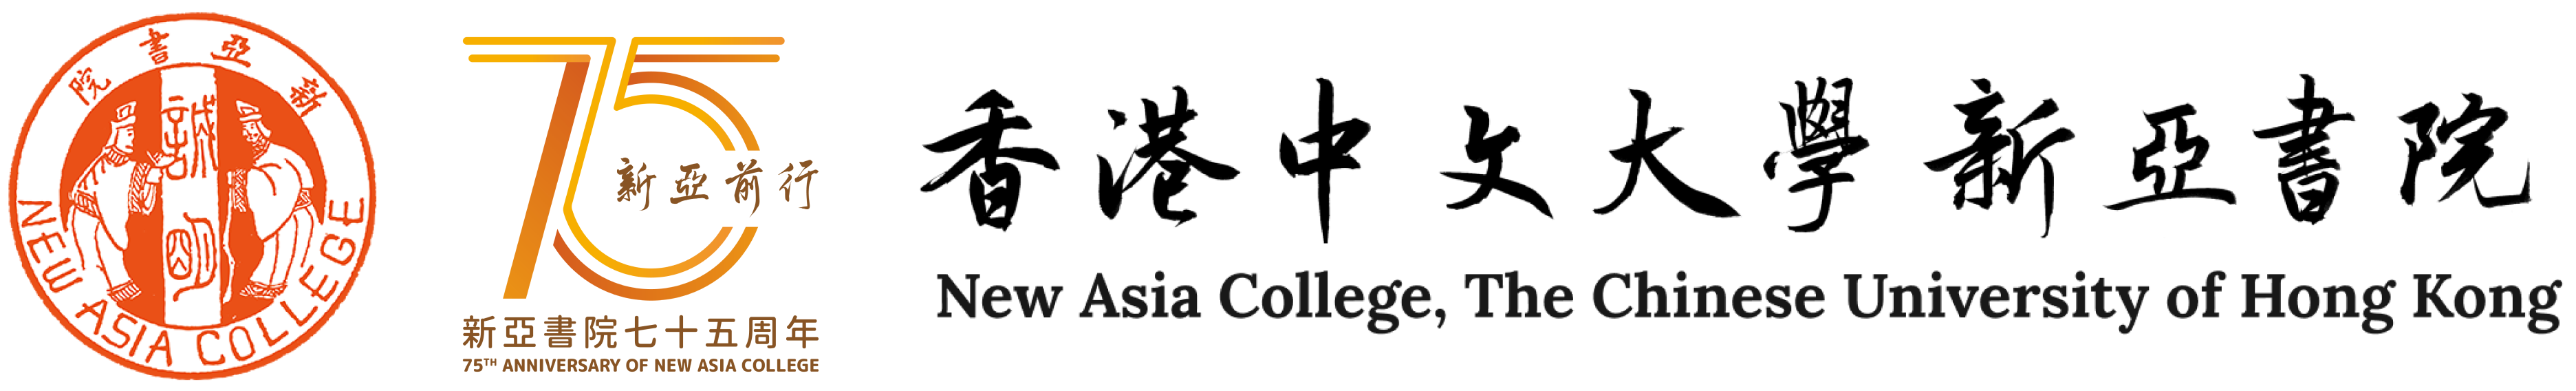 CUHK New Asia College